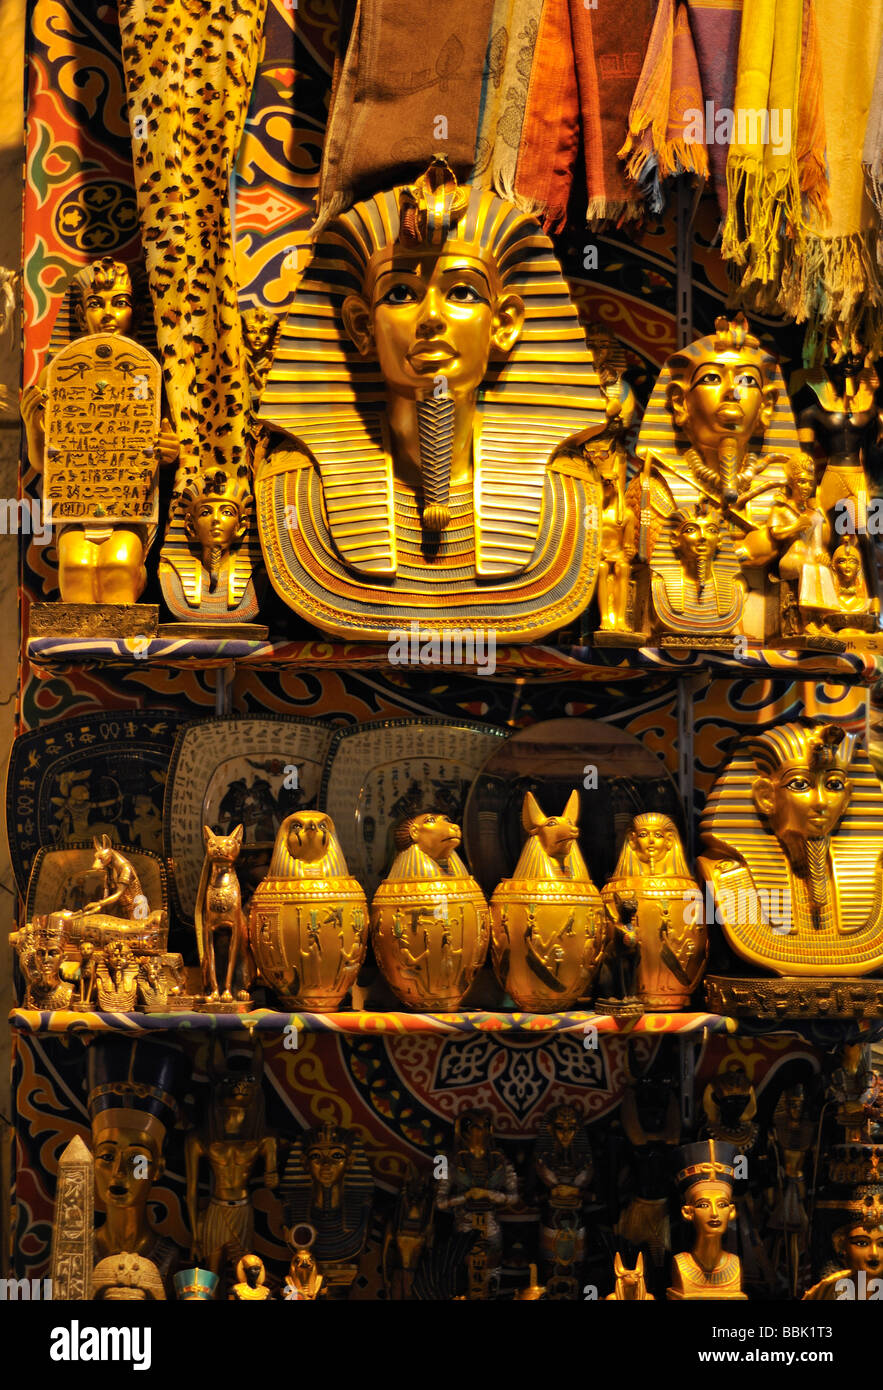 Tutankhamun Statue on Display at Khan al Khalili Market Islamic Cairo Egypt Stock Photo